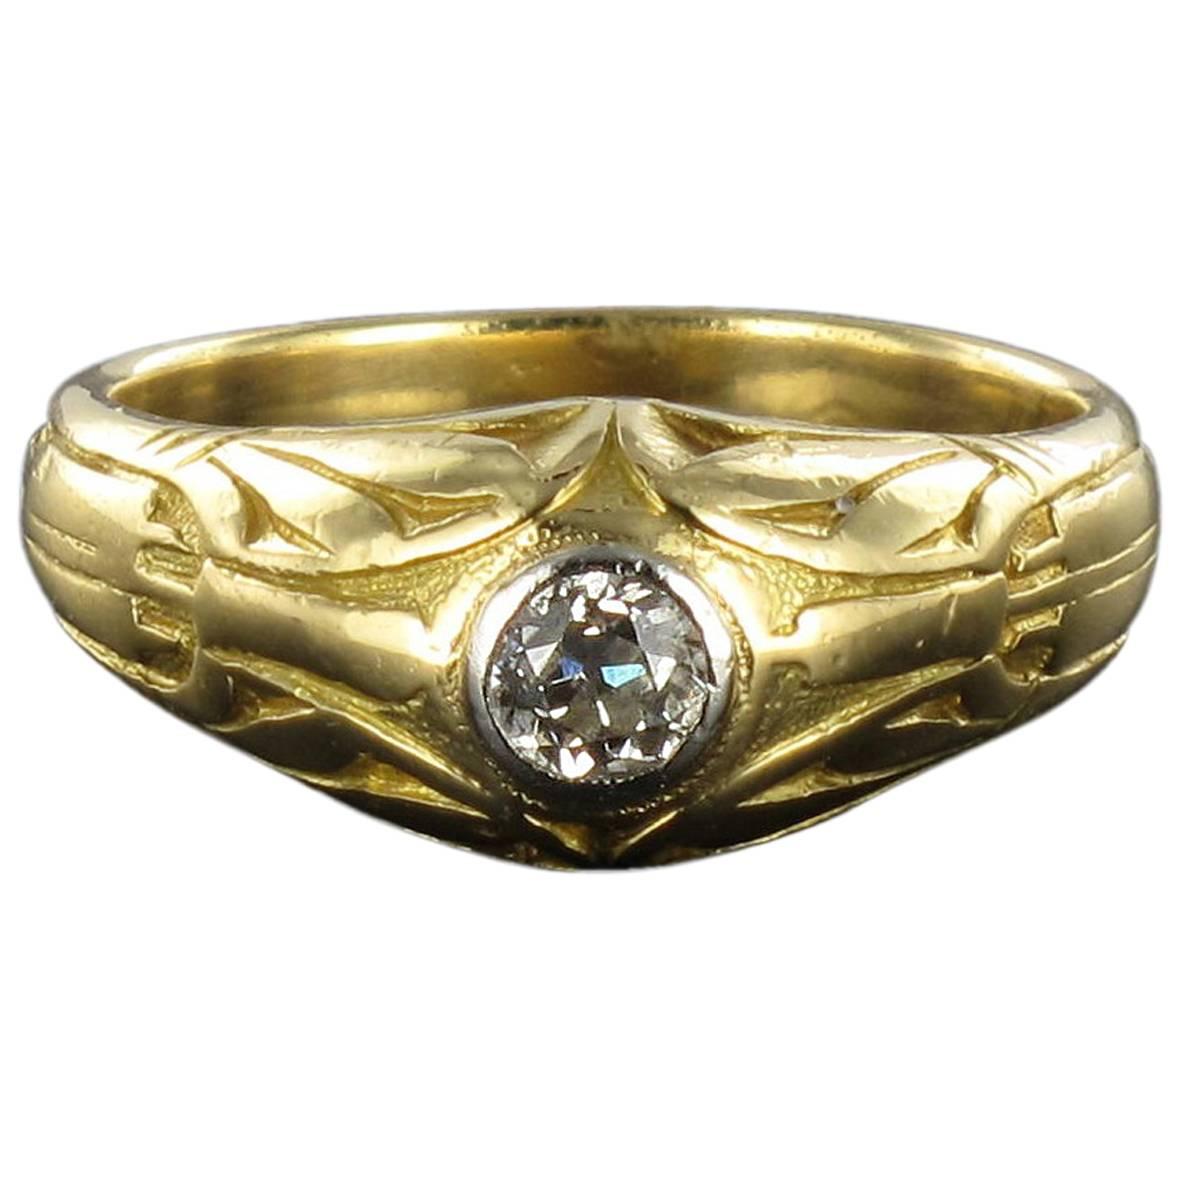 Antique Engraved Men’s Diamond Gold Signet Ring